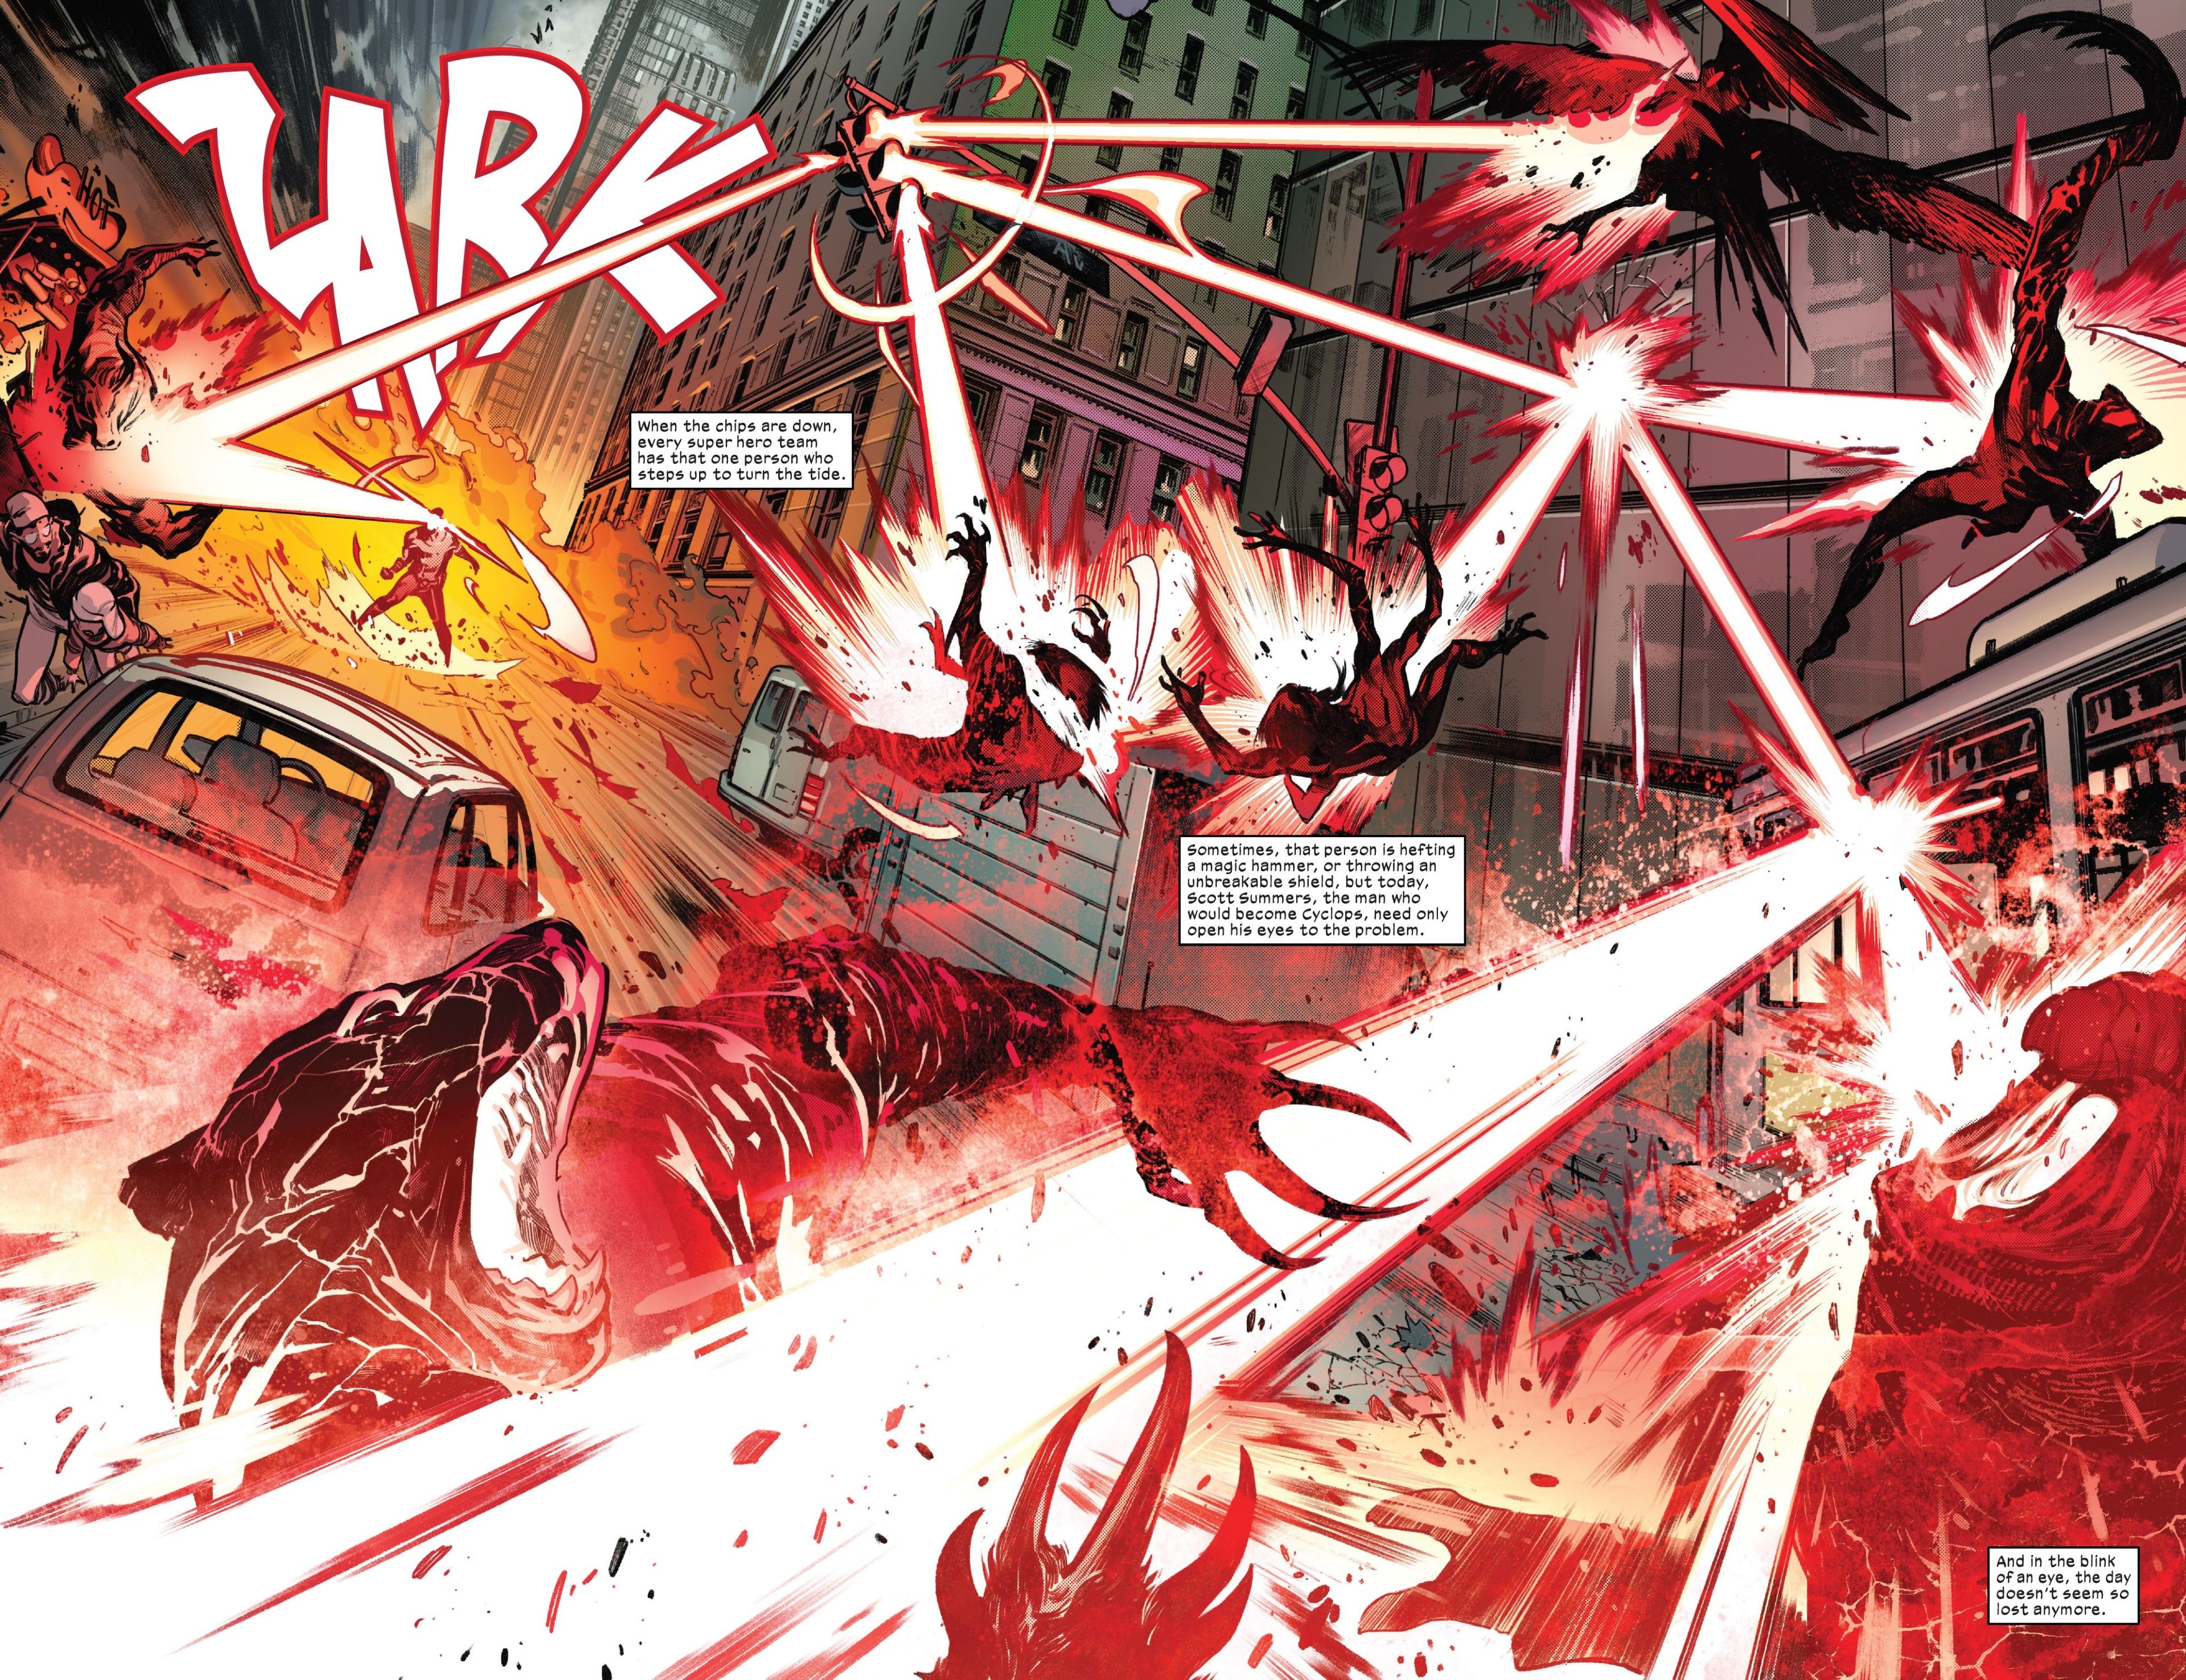 x-men's cyclops splits his blast using a traffic light to shoot many cyborg animals